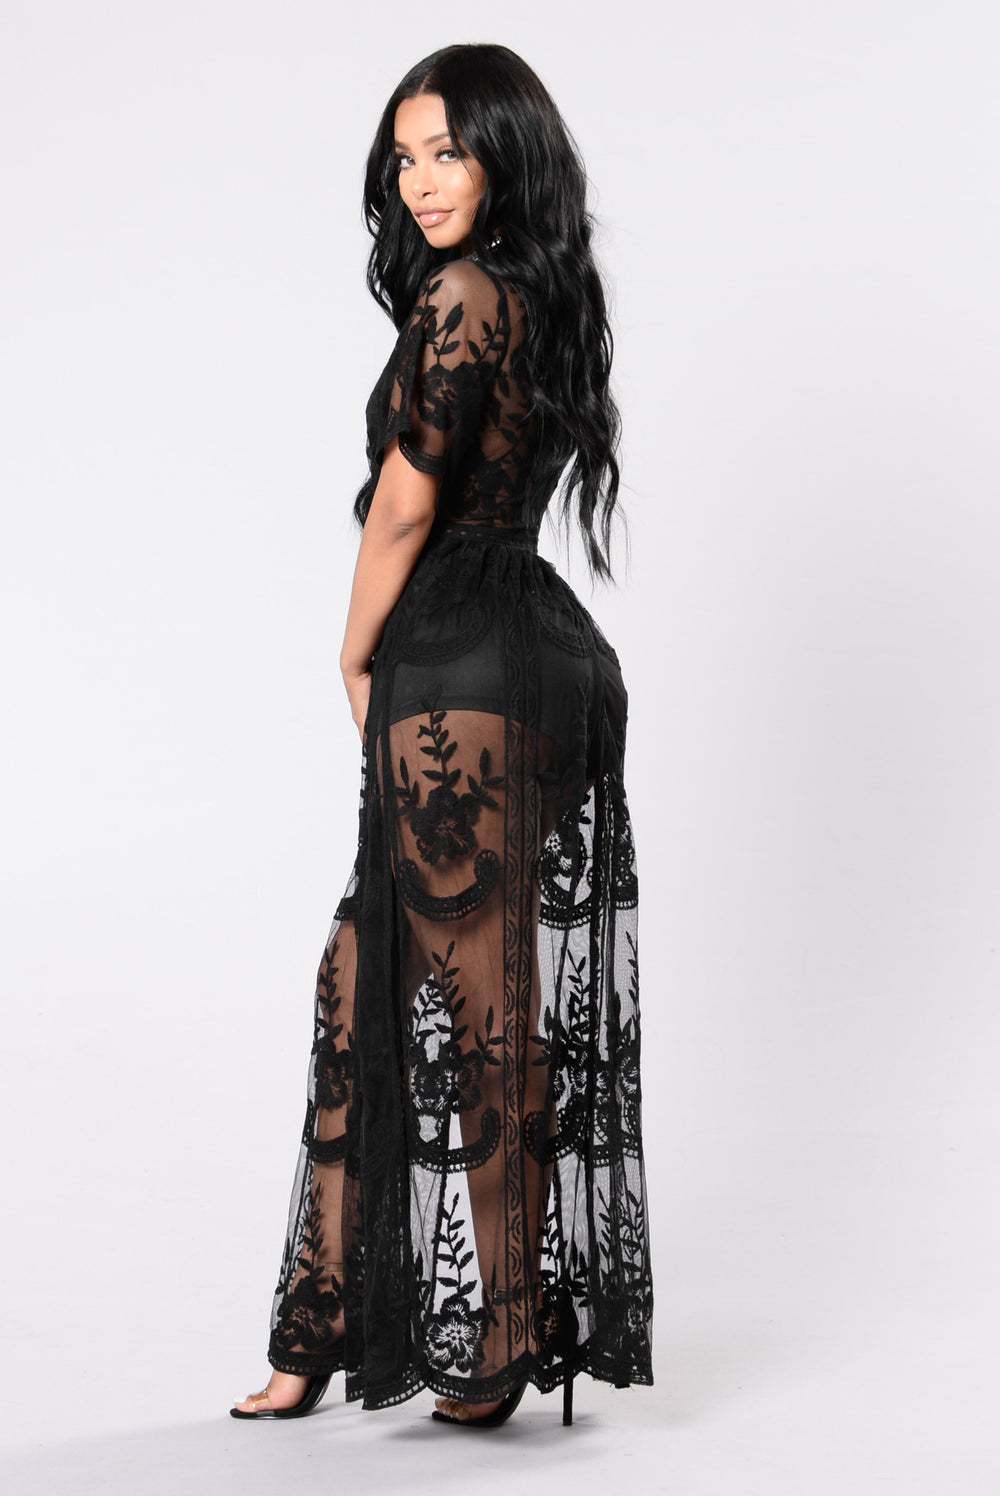 black dress set